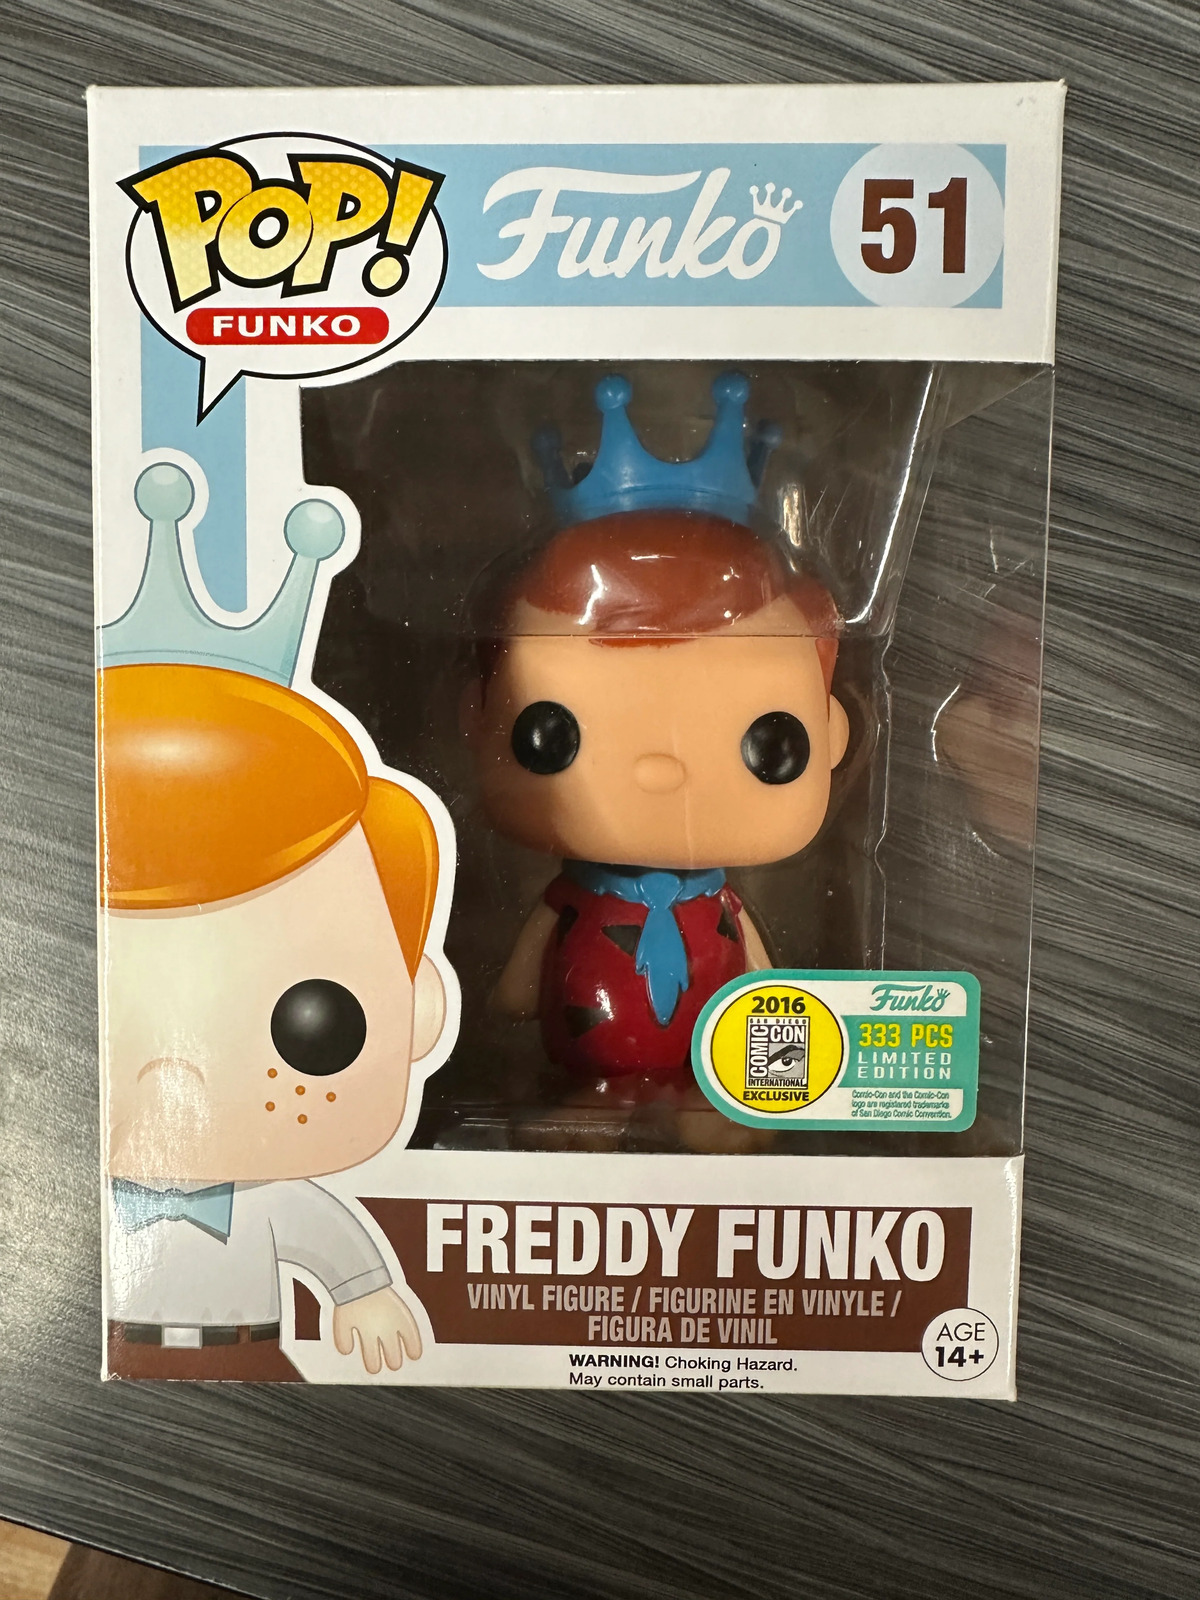 Funko POP Freddy Funko [Fred Flintstone](2016 SDCC/333 PCS)(Damaged Box) #51